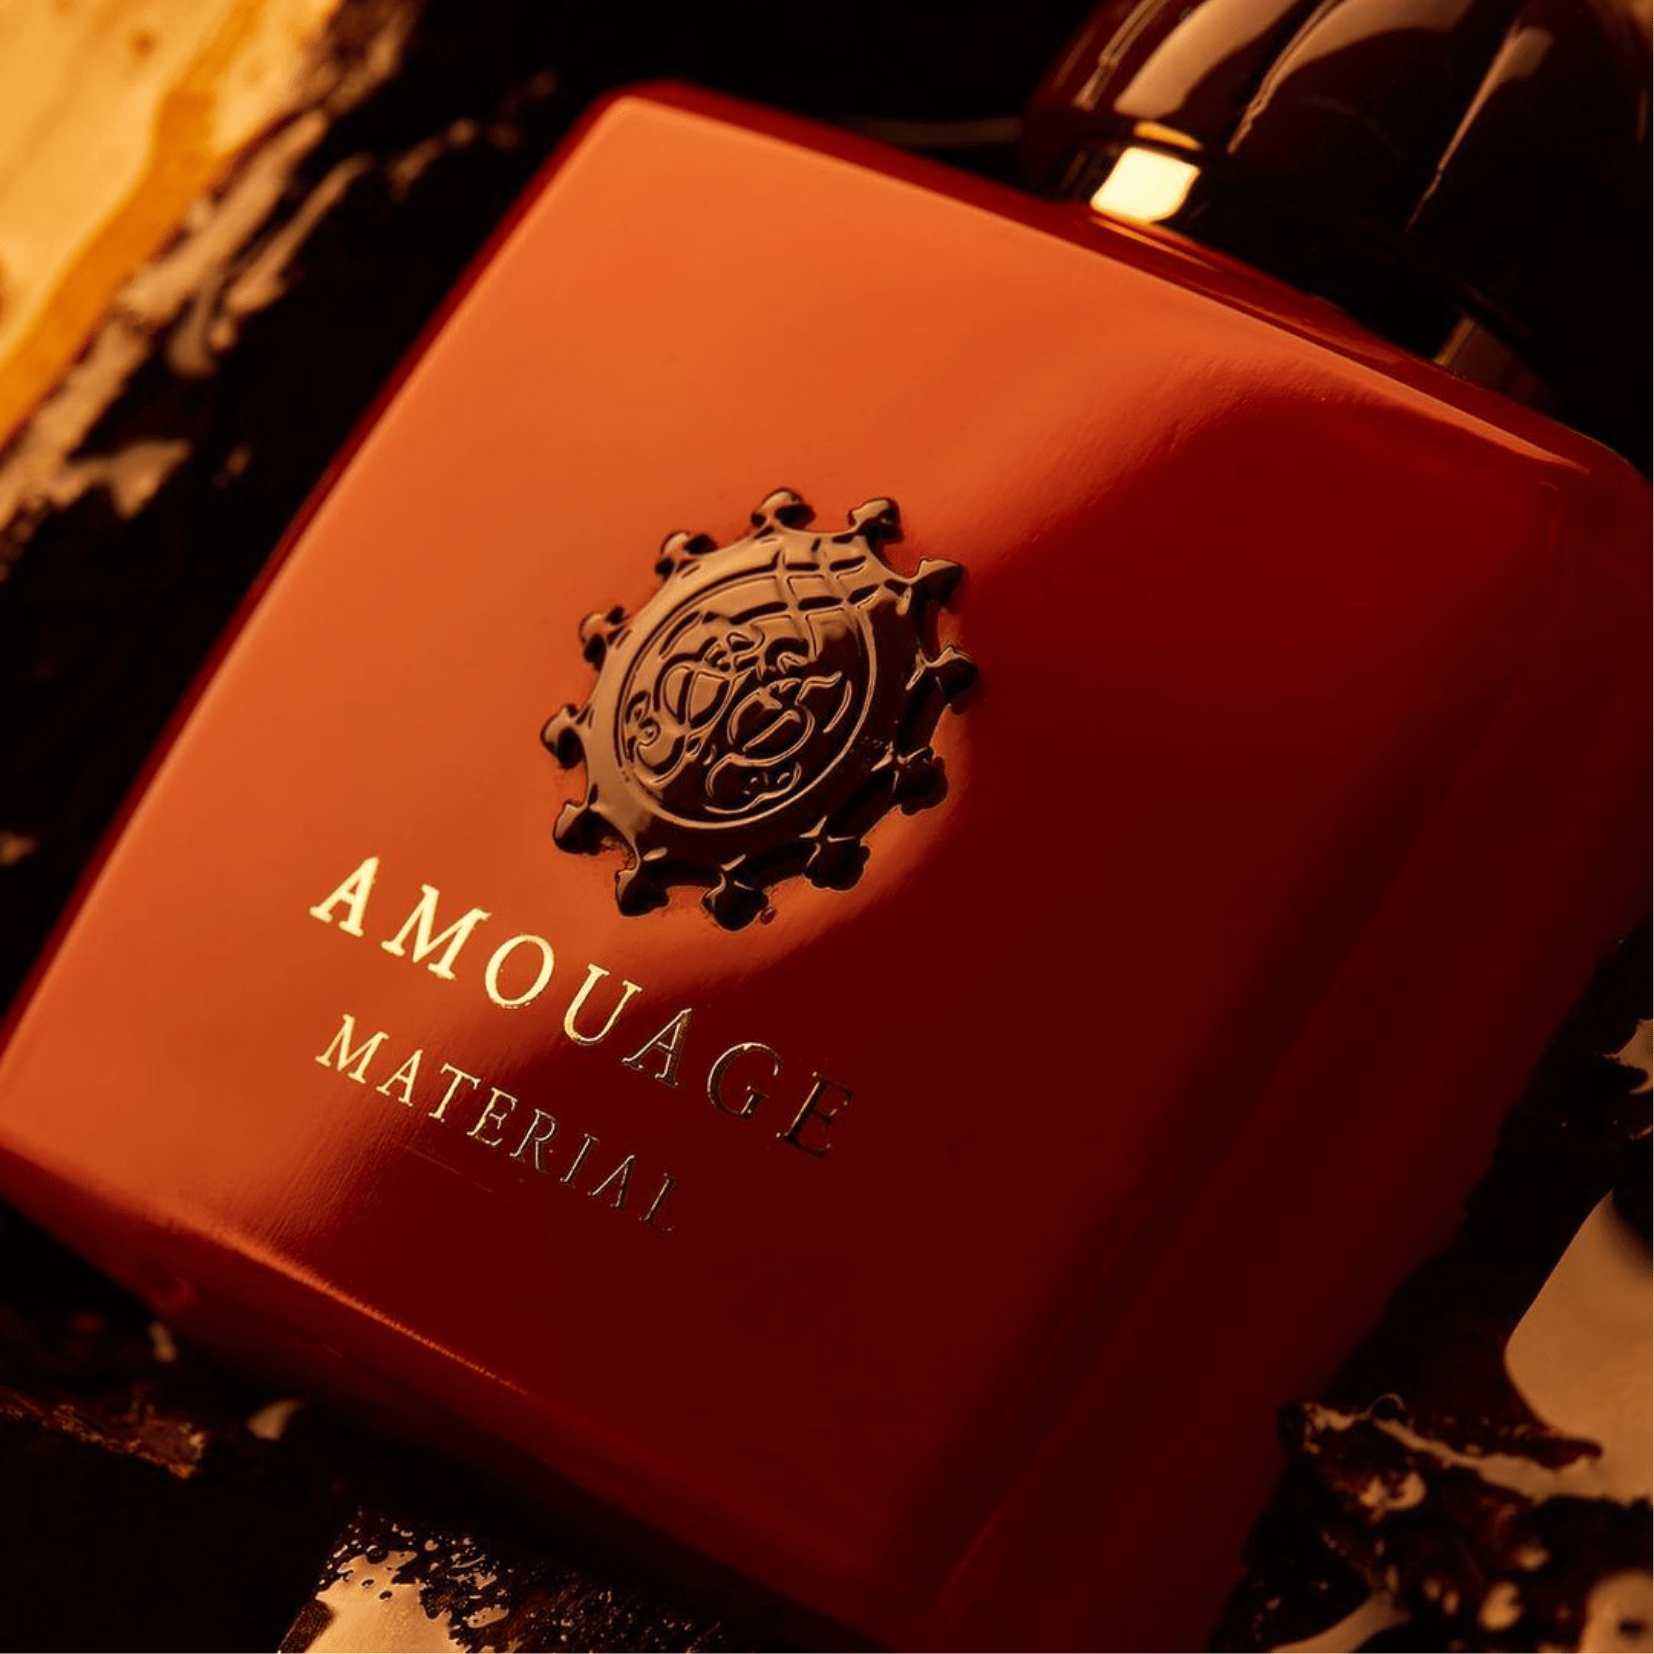 Amouage Material EDP | My Perfume Shop Australia